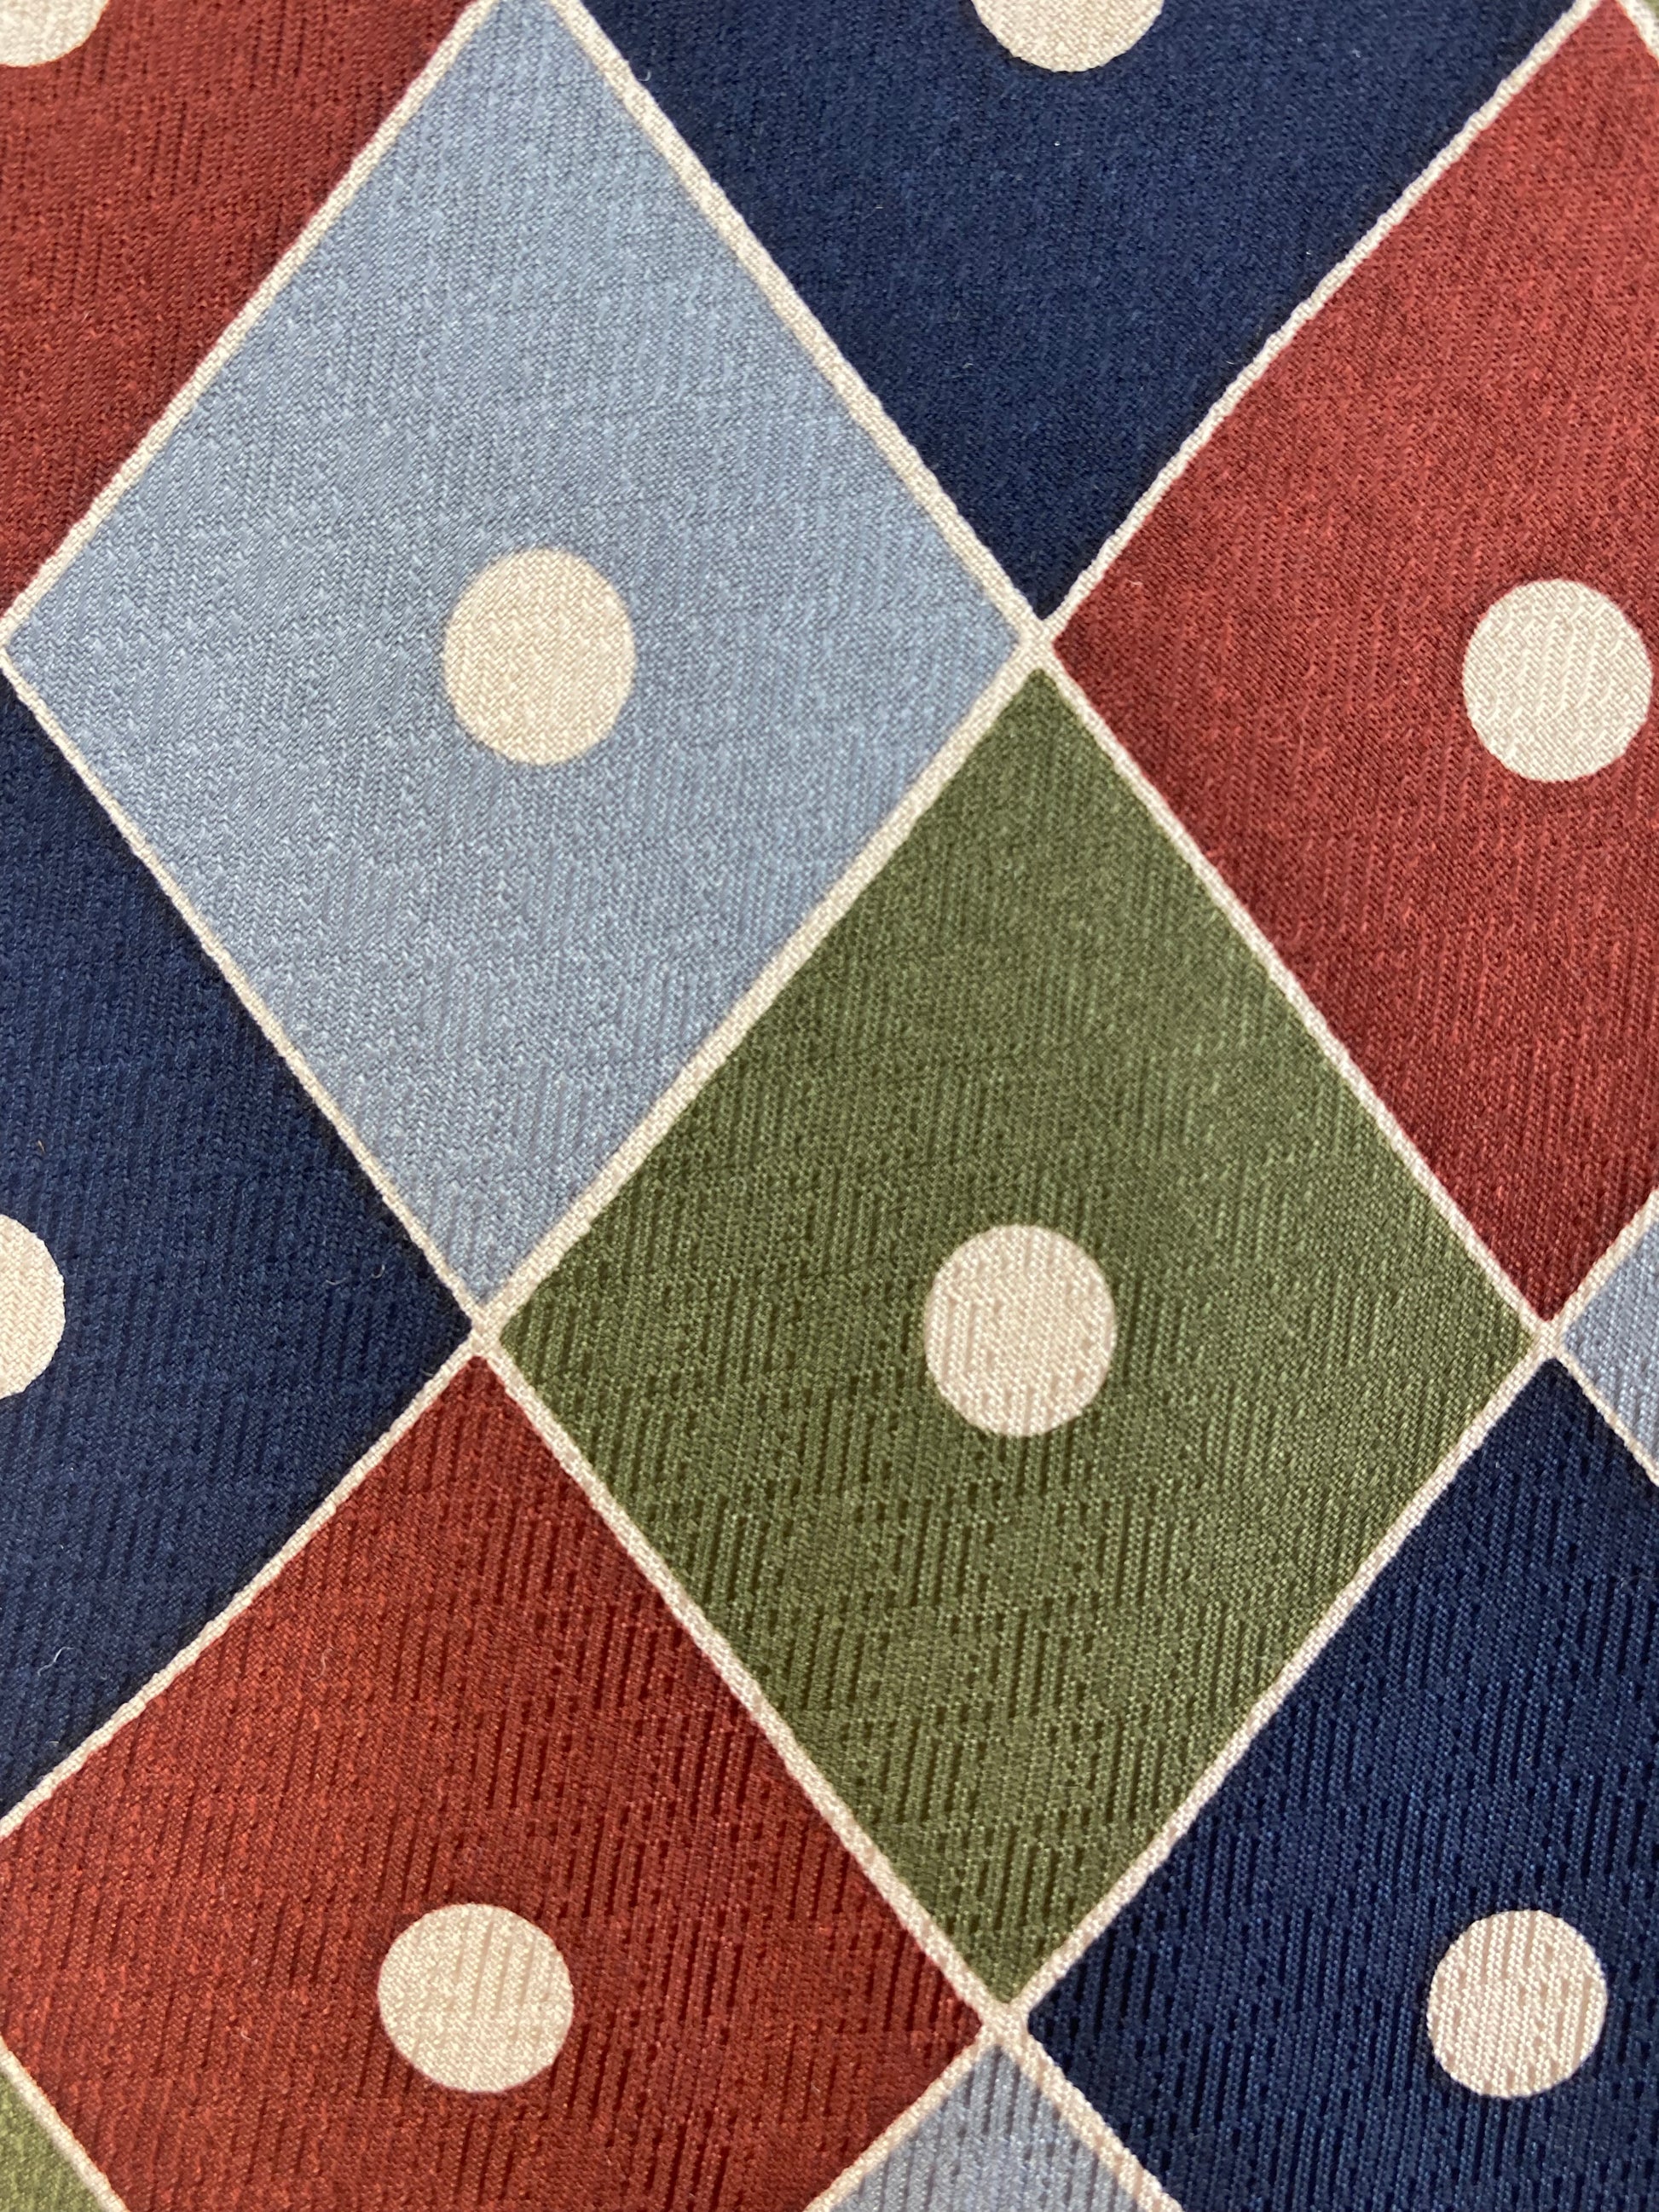 Close-up of: 90s Deadstock Silk Necktie, Men's Vintage Green/ Blue Checker Dot Pattern Tie, NOS